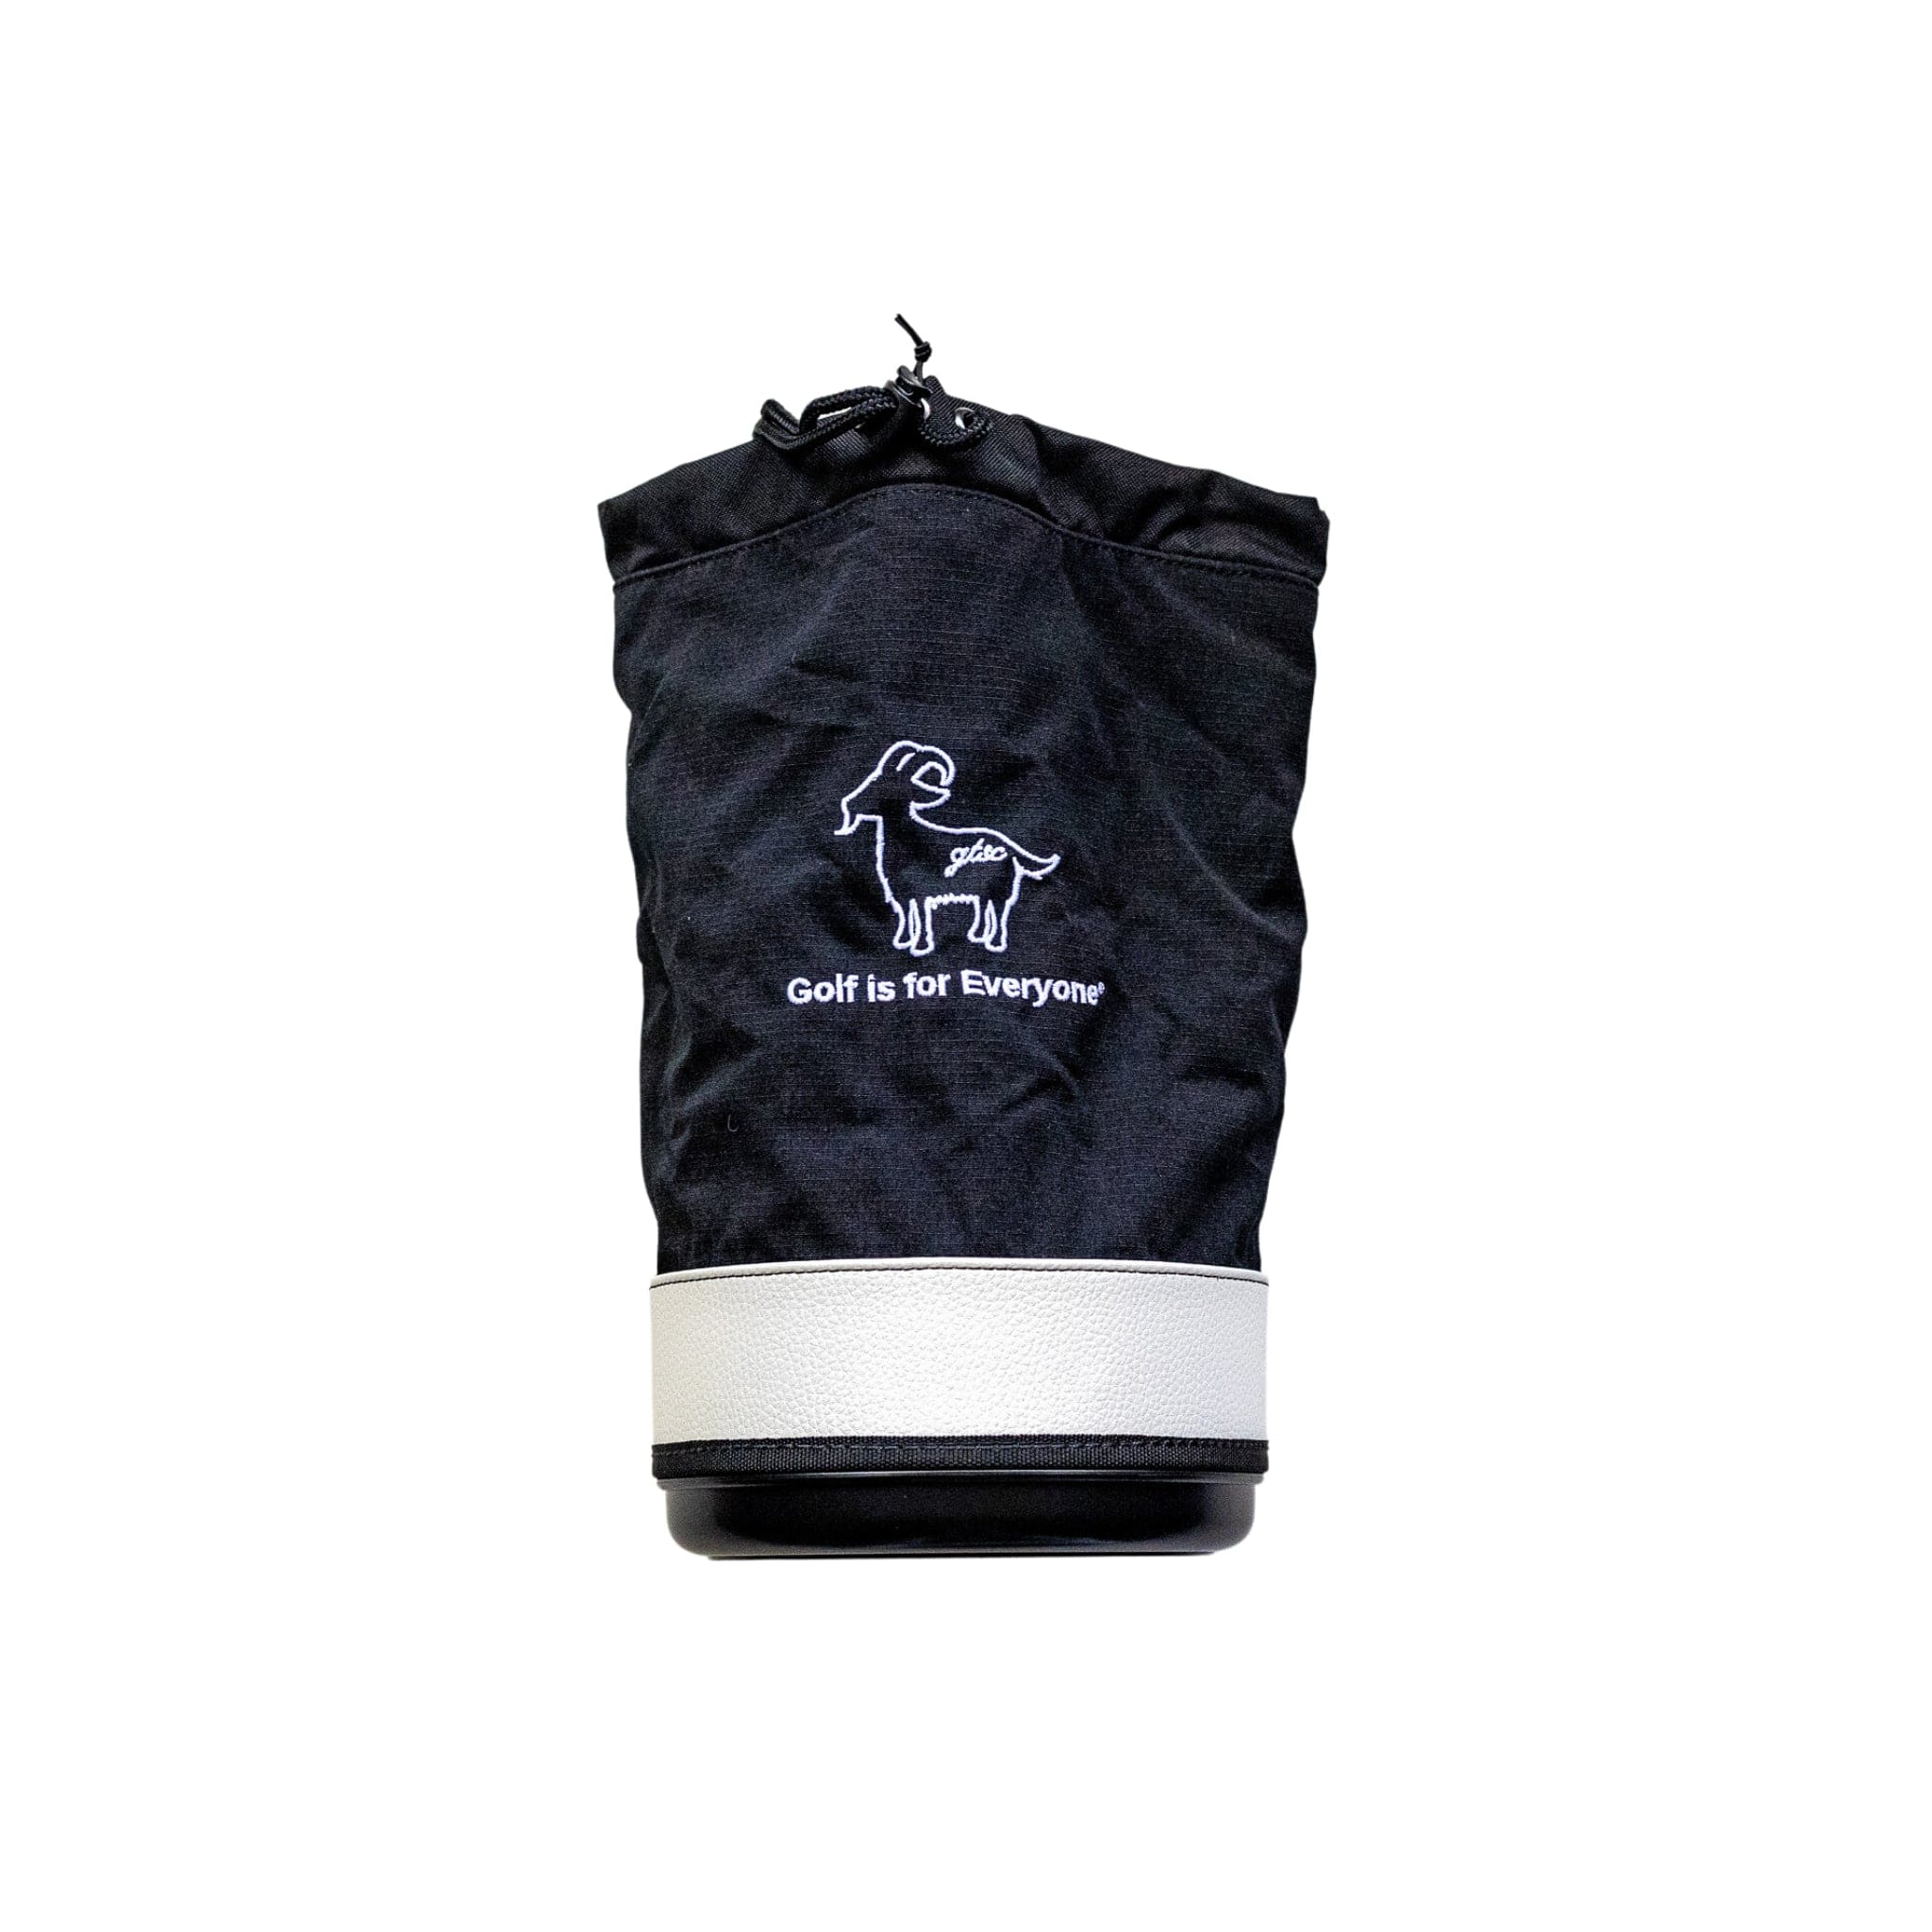 ***GTSC Jones Cooler Bag Apparel & Accessories Canada-Golf-Lifestyle-Clothing-Brand